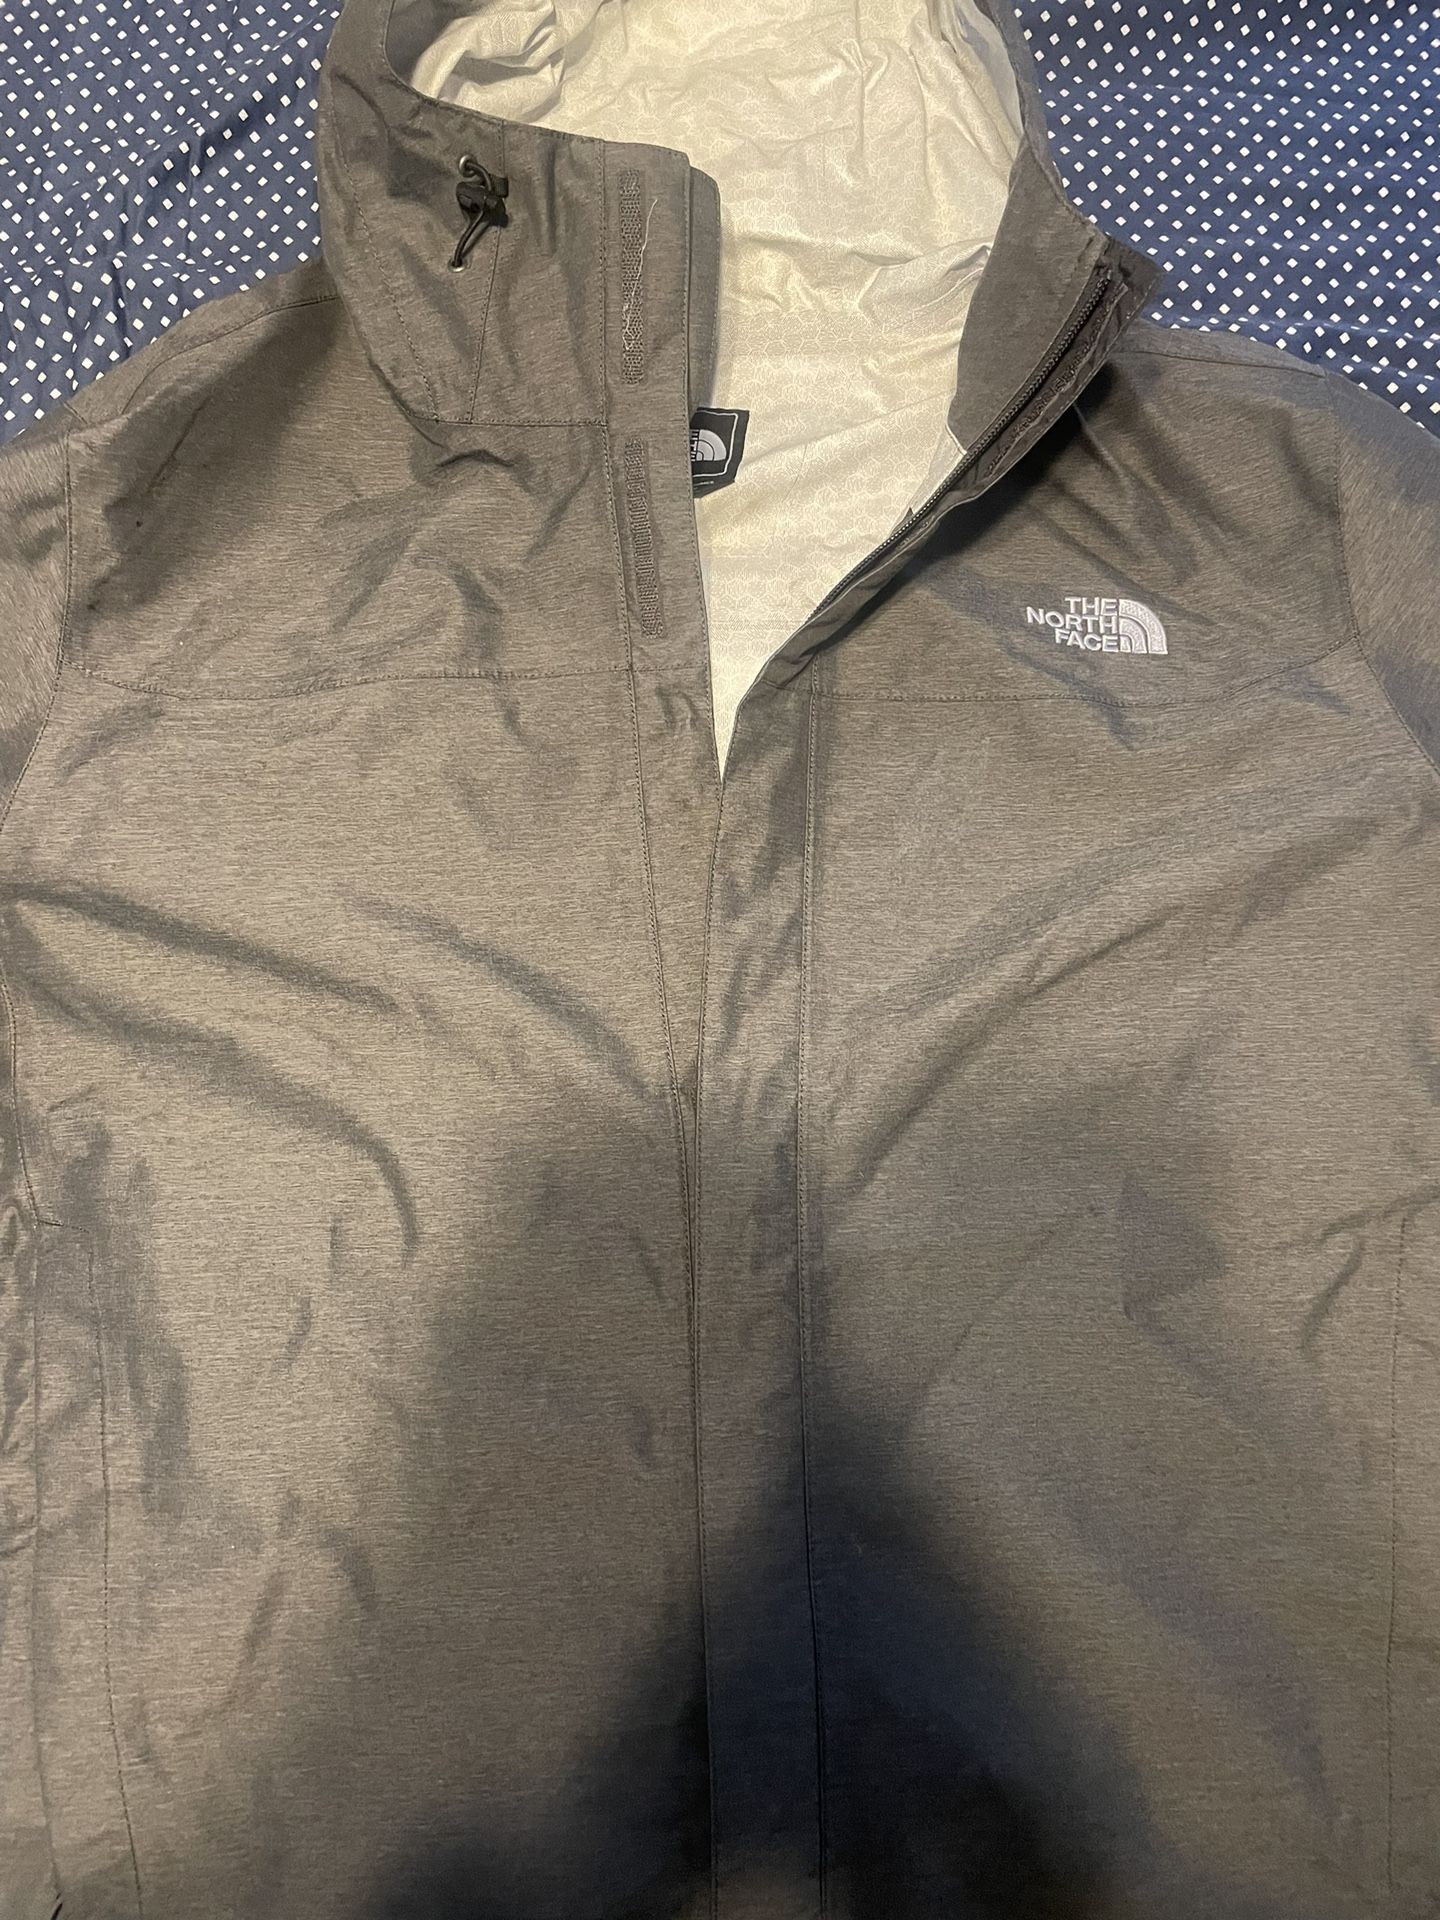 North face Rain Jacket Size XL